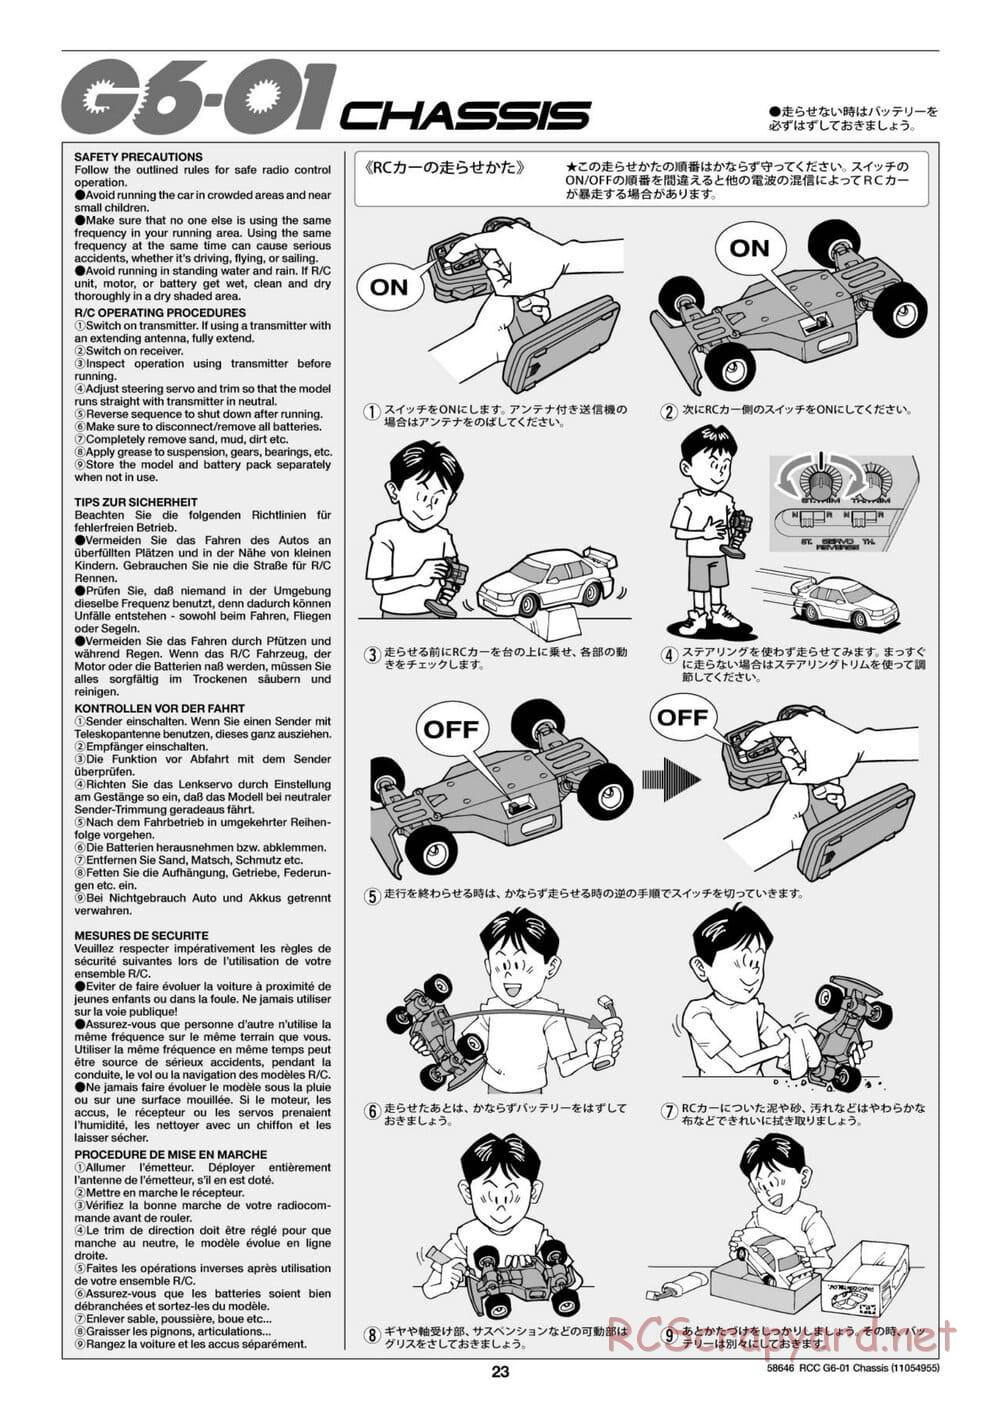 Tamiya - Konghead 6x6 - G6-01 Chassis - Manual - Page 23